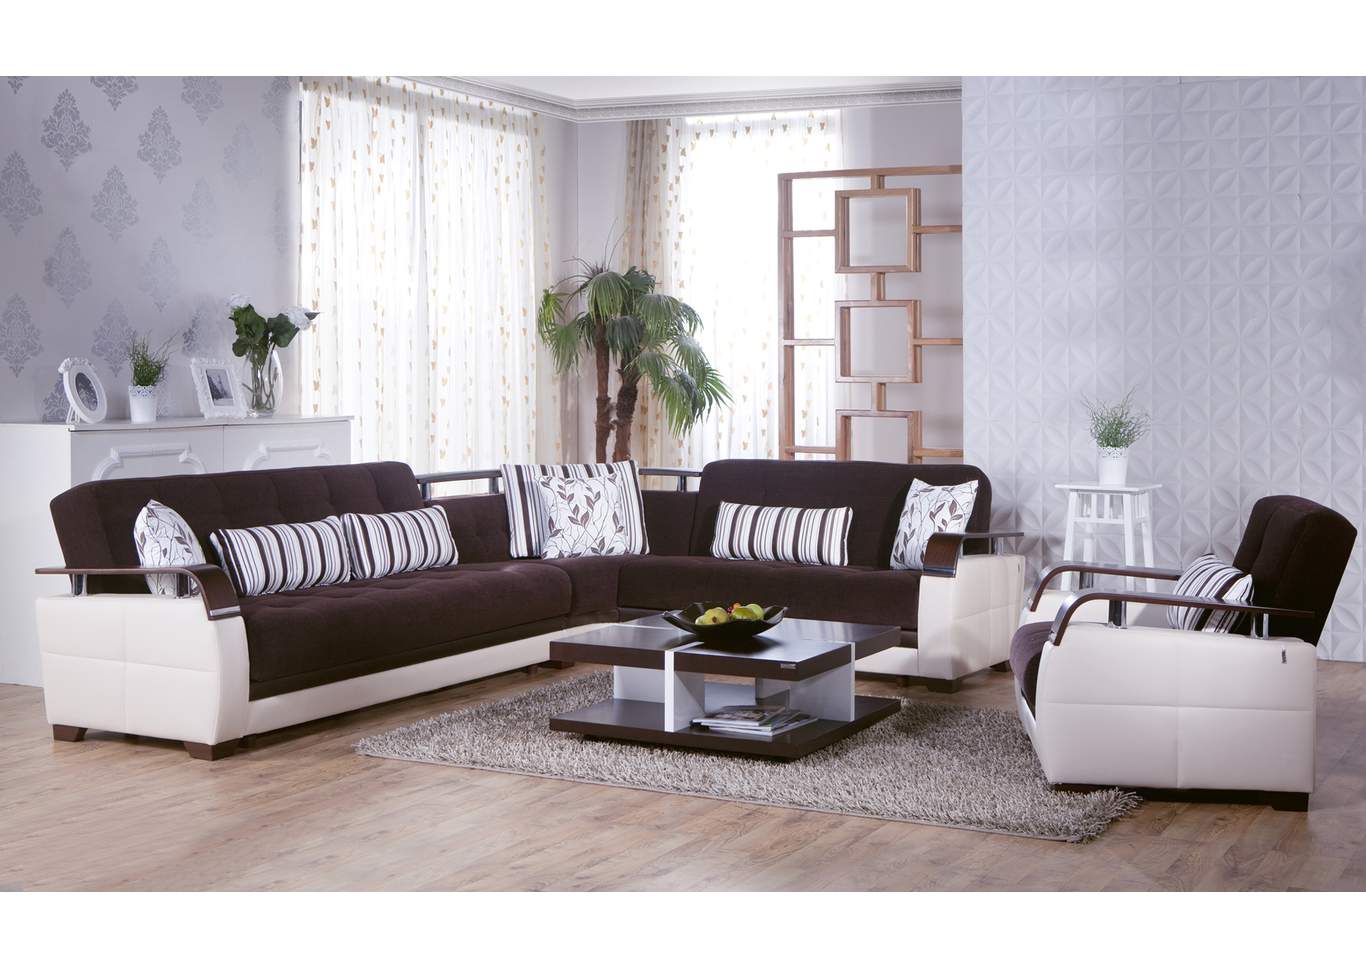 Natural Colins Brown Sectional,Hudson Furniture & Bedding